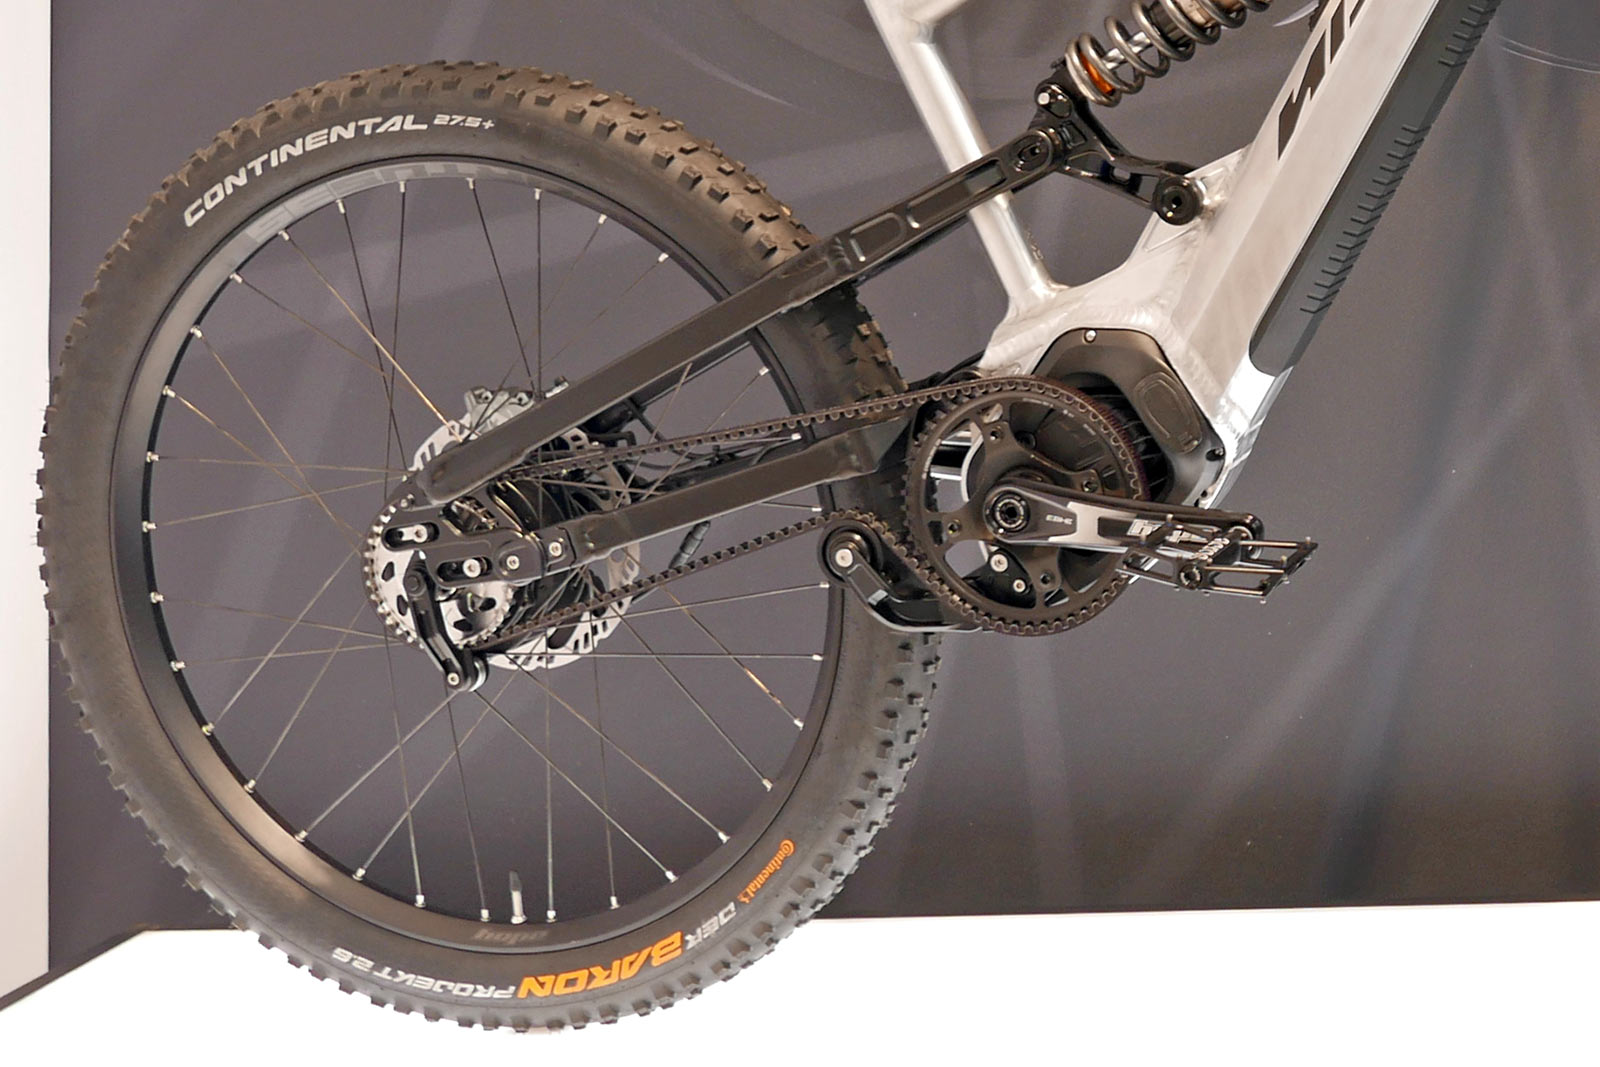 3X3 Nine NO maintenance internal gear hub, full-suspension eMTB mountain bike